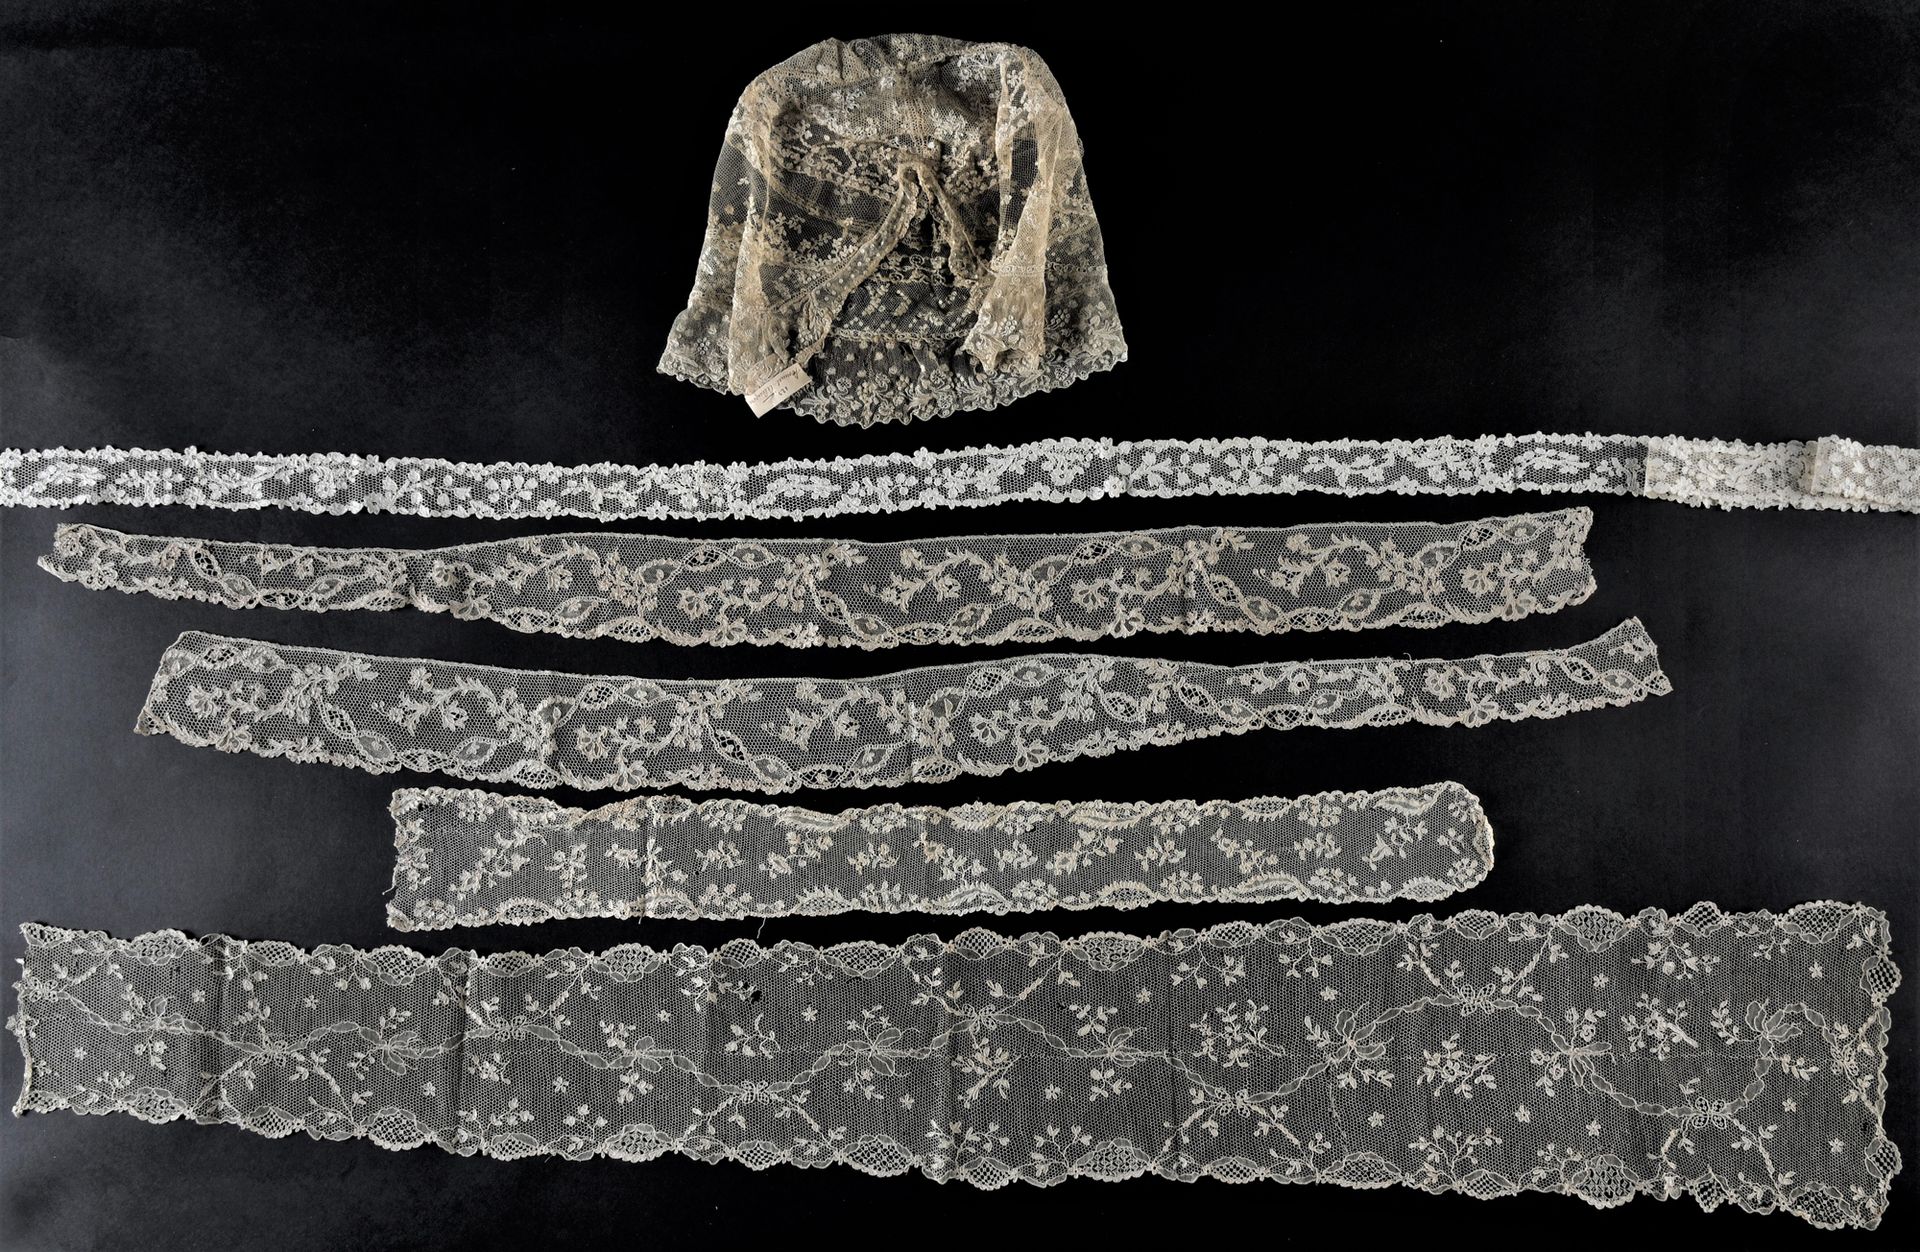 Null 针刺花边的妇女服装配件，阿根廷，约1760-70。

有花卉装饰和六边形的网状结构，用花环缝制，象牙色或奶油色的亚麻布精细制作。

一顶帽子，由阿根廷&hellip;